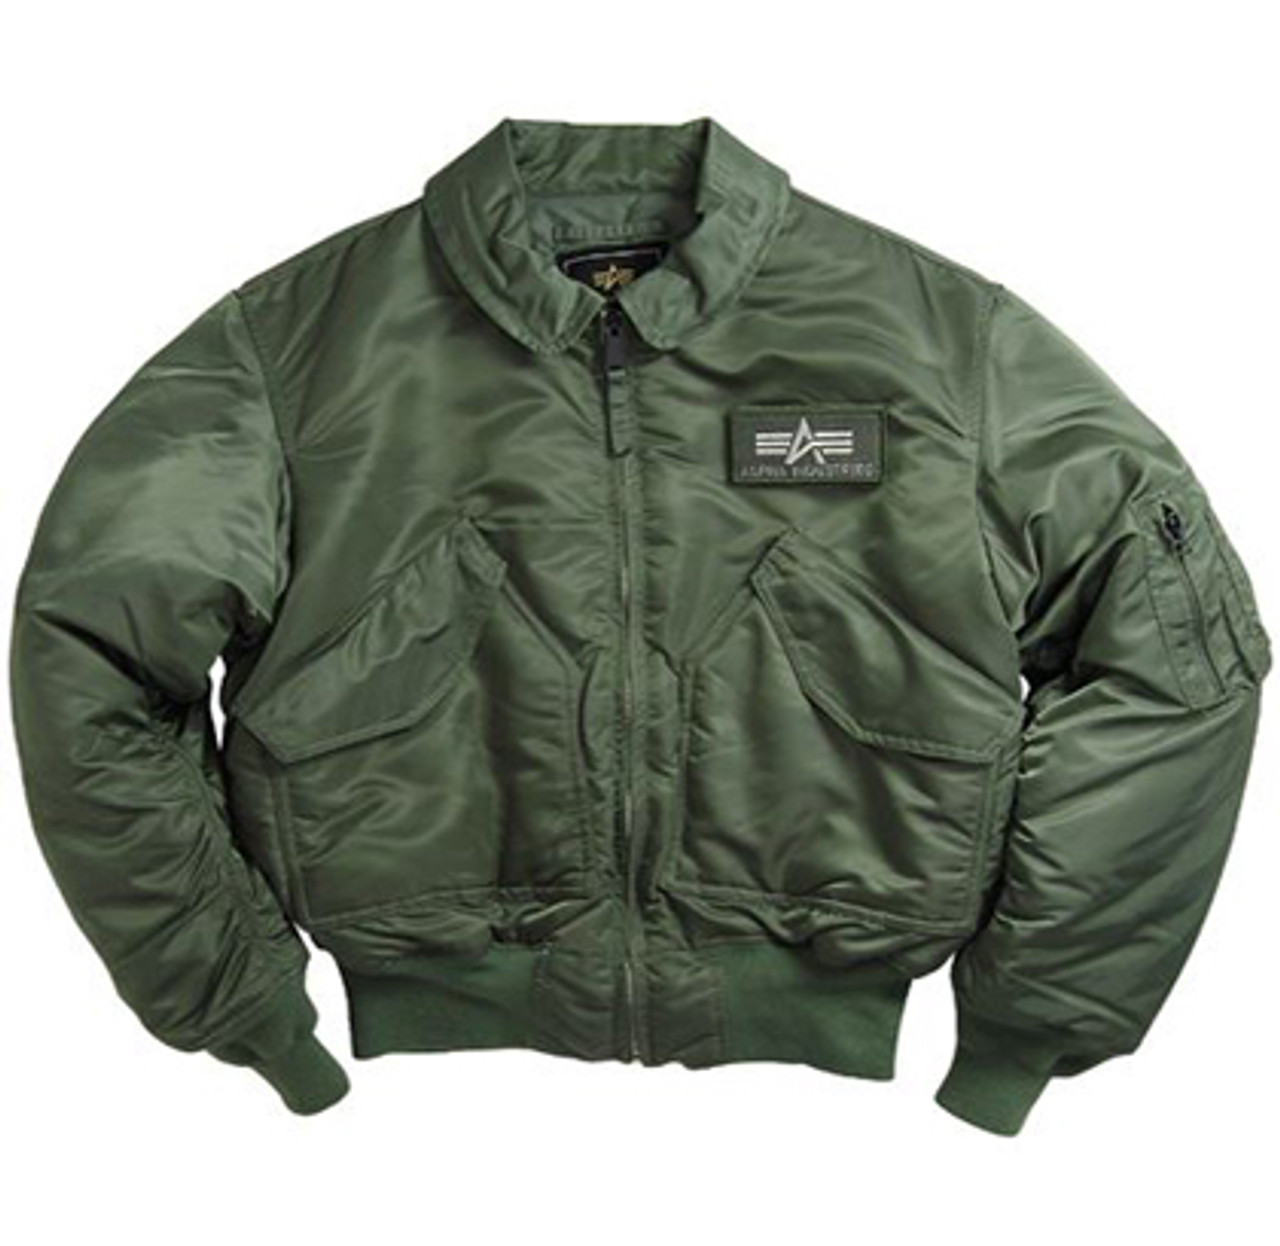 Shop Alpha CWU Army Fatigues Gear Jackets 45/P Co Flight - Navy